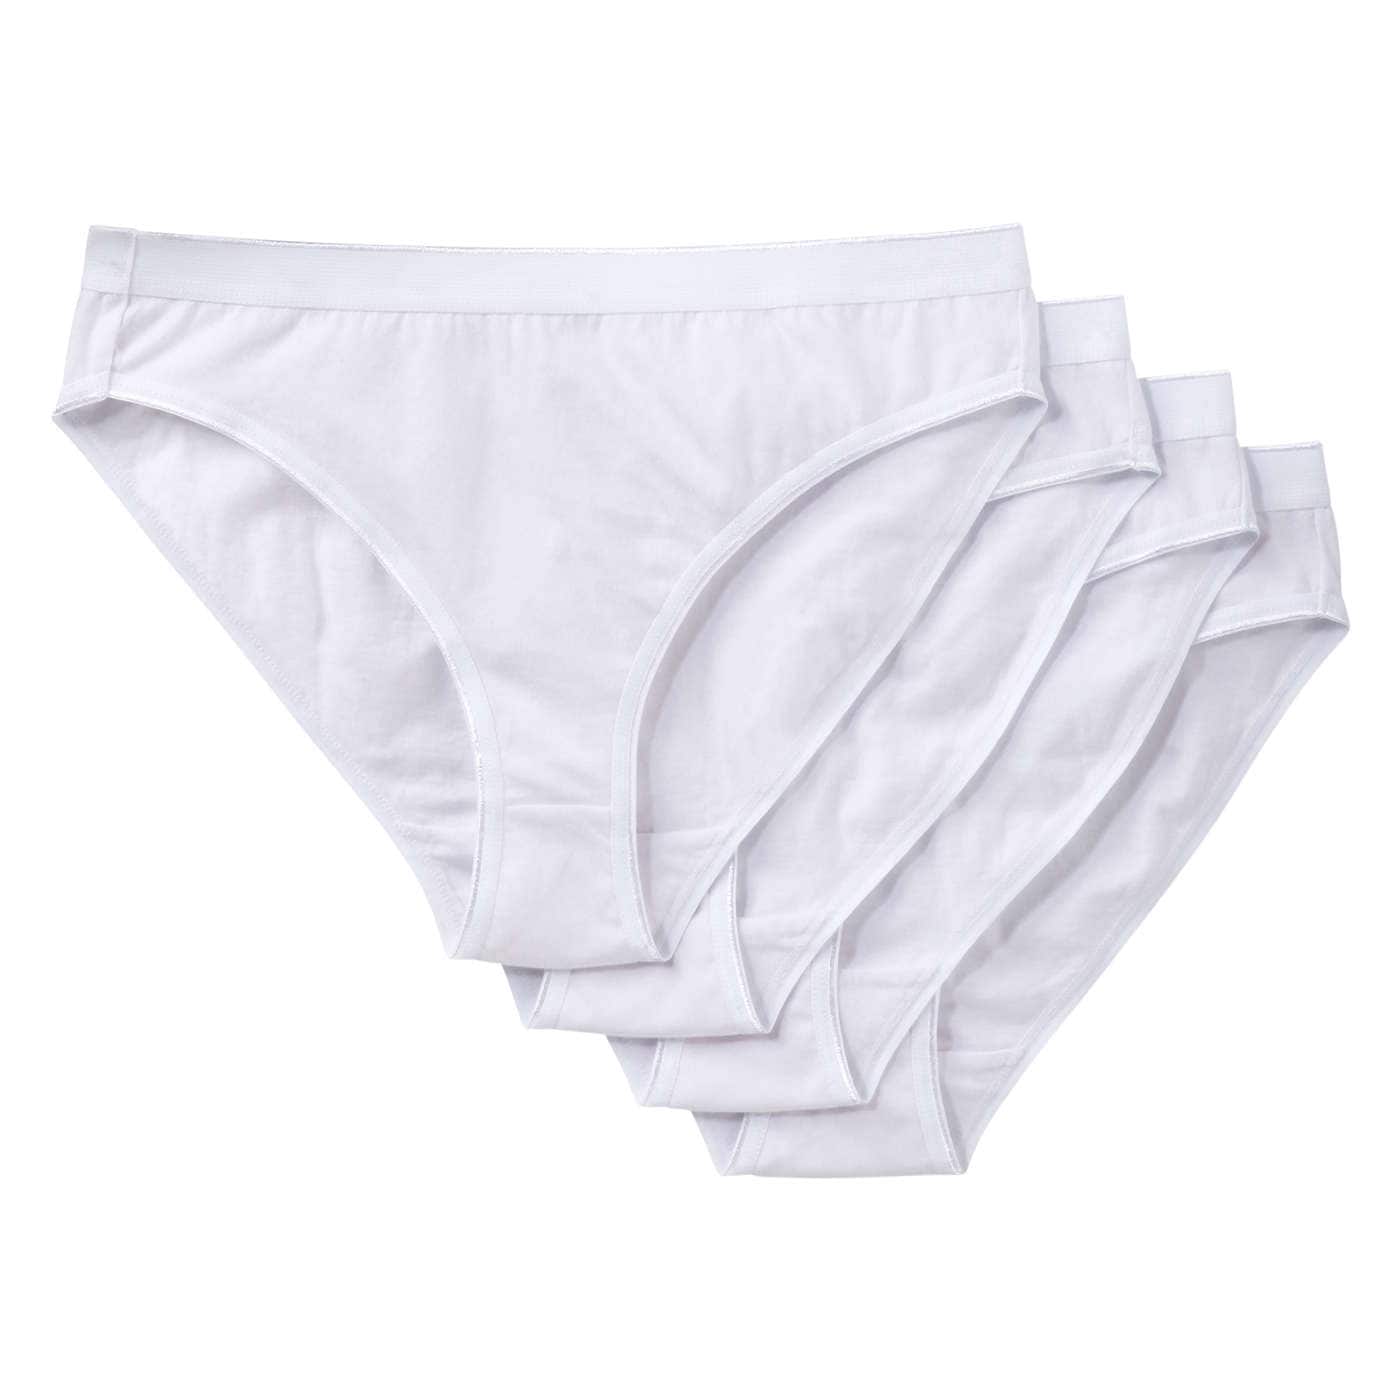 Soma Travelers High Leg Brief Underwear, White/Ivory, size S